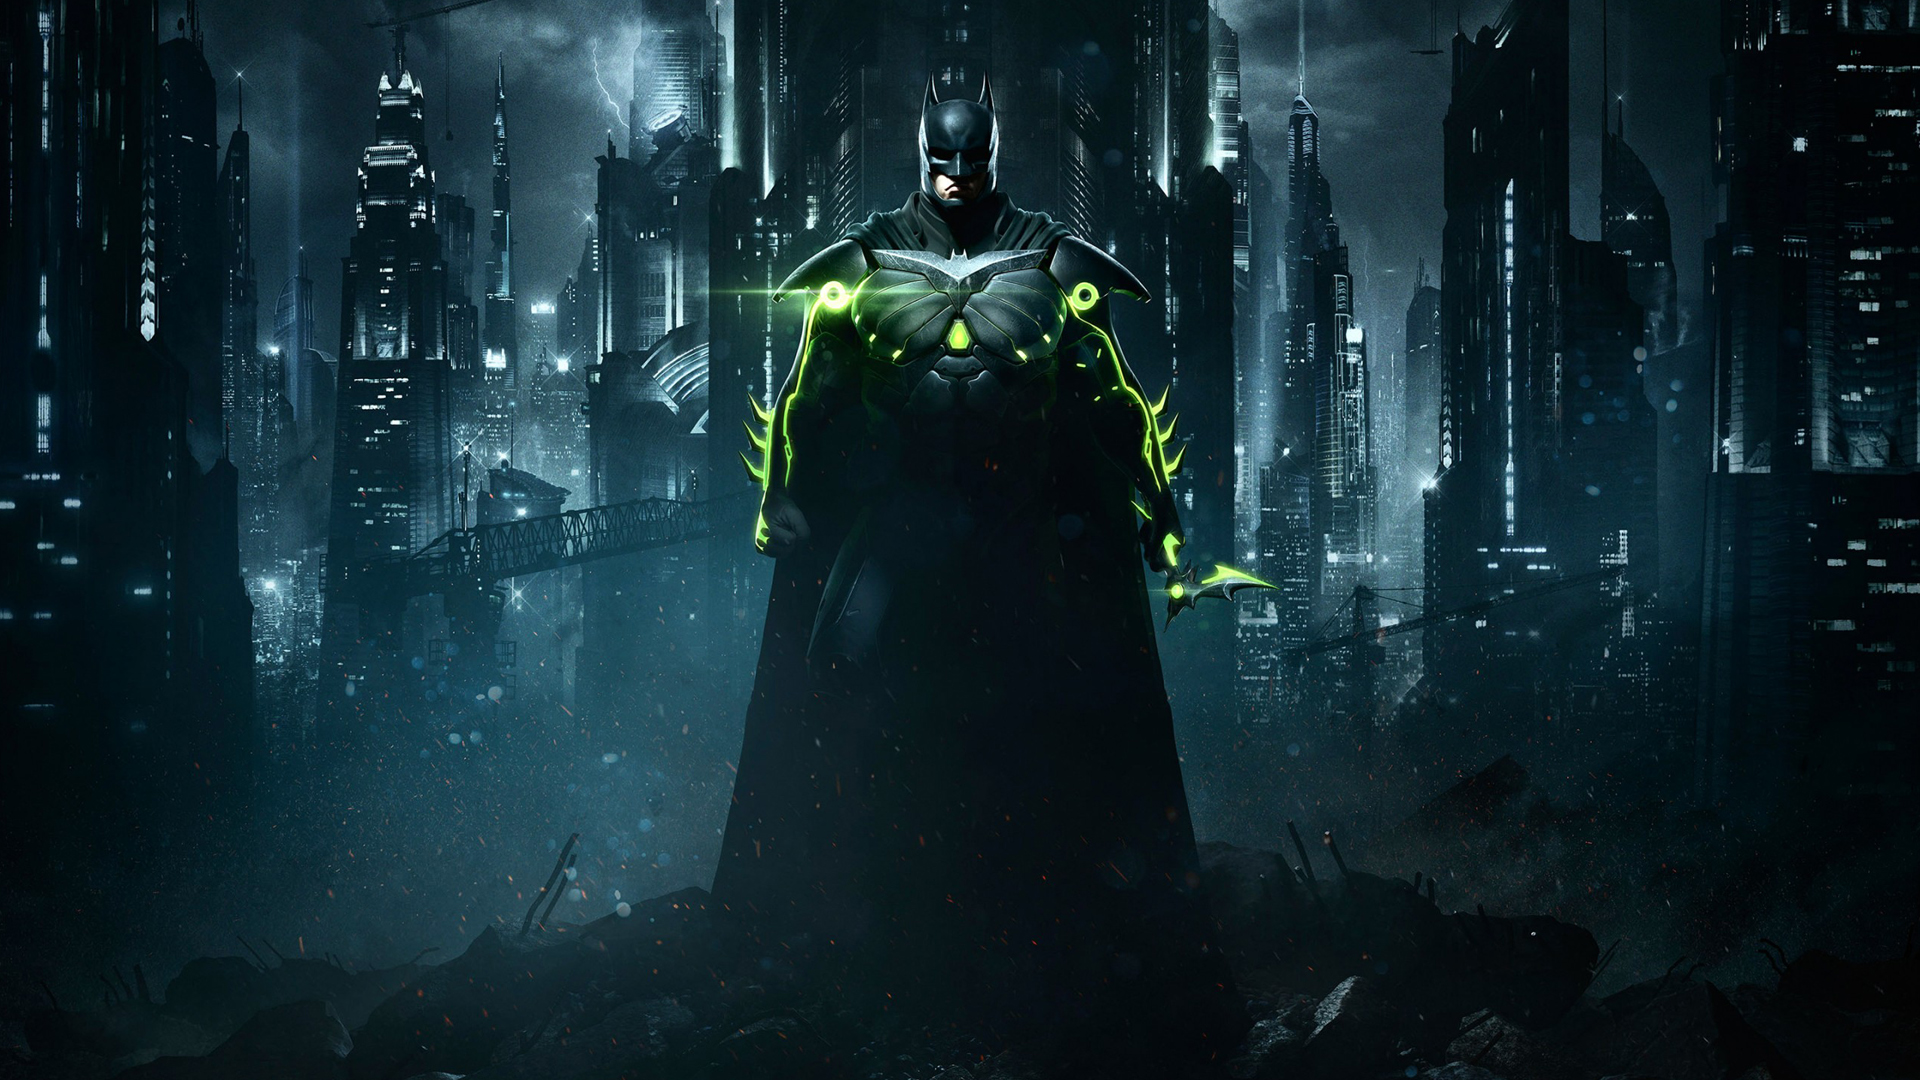 Dark Batman Eternal Batman Mask City Superhero Armor City Lights Night Mask 1920x1080